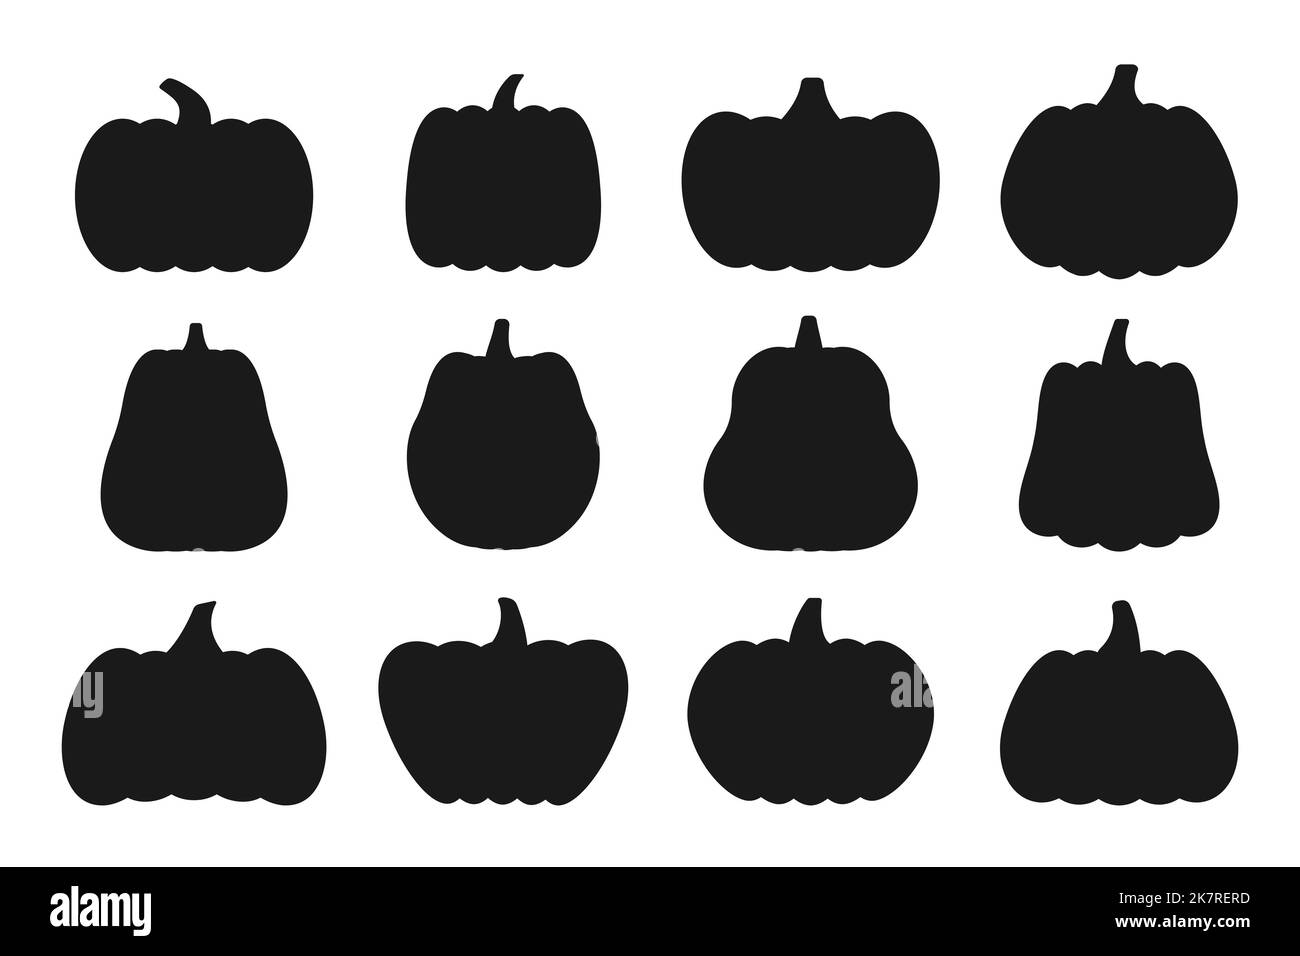 Pumpkins black silhouette flat icons set. Halloween sign kit. Thanksgiving pictogram collection farm harvest, closeup squash vegetable. Simple pumpkin cartoon contour icon symbol isolated on white Stock Vector